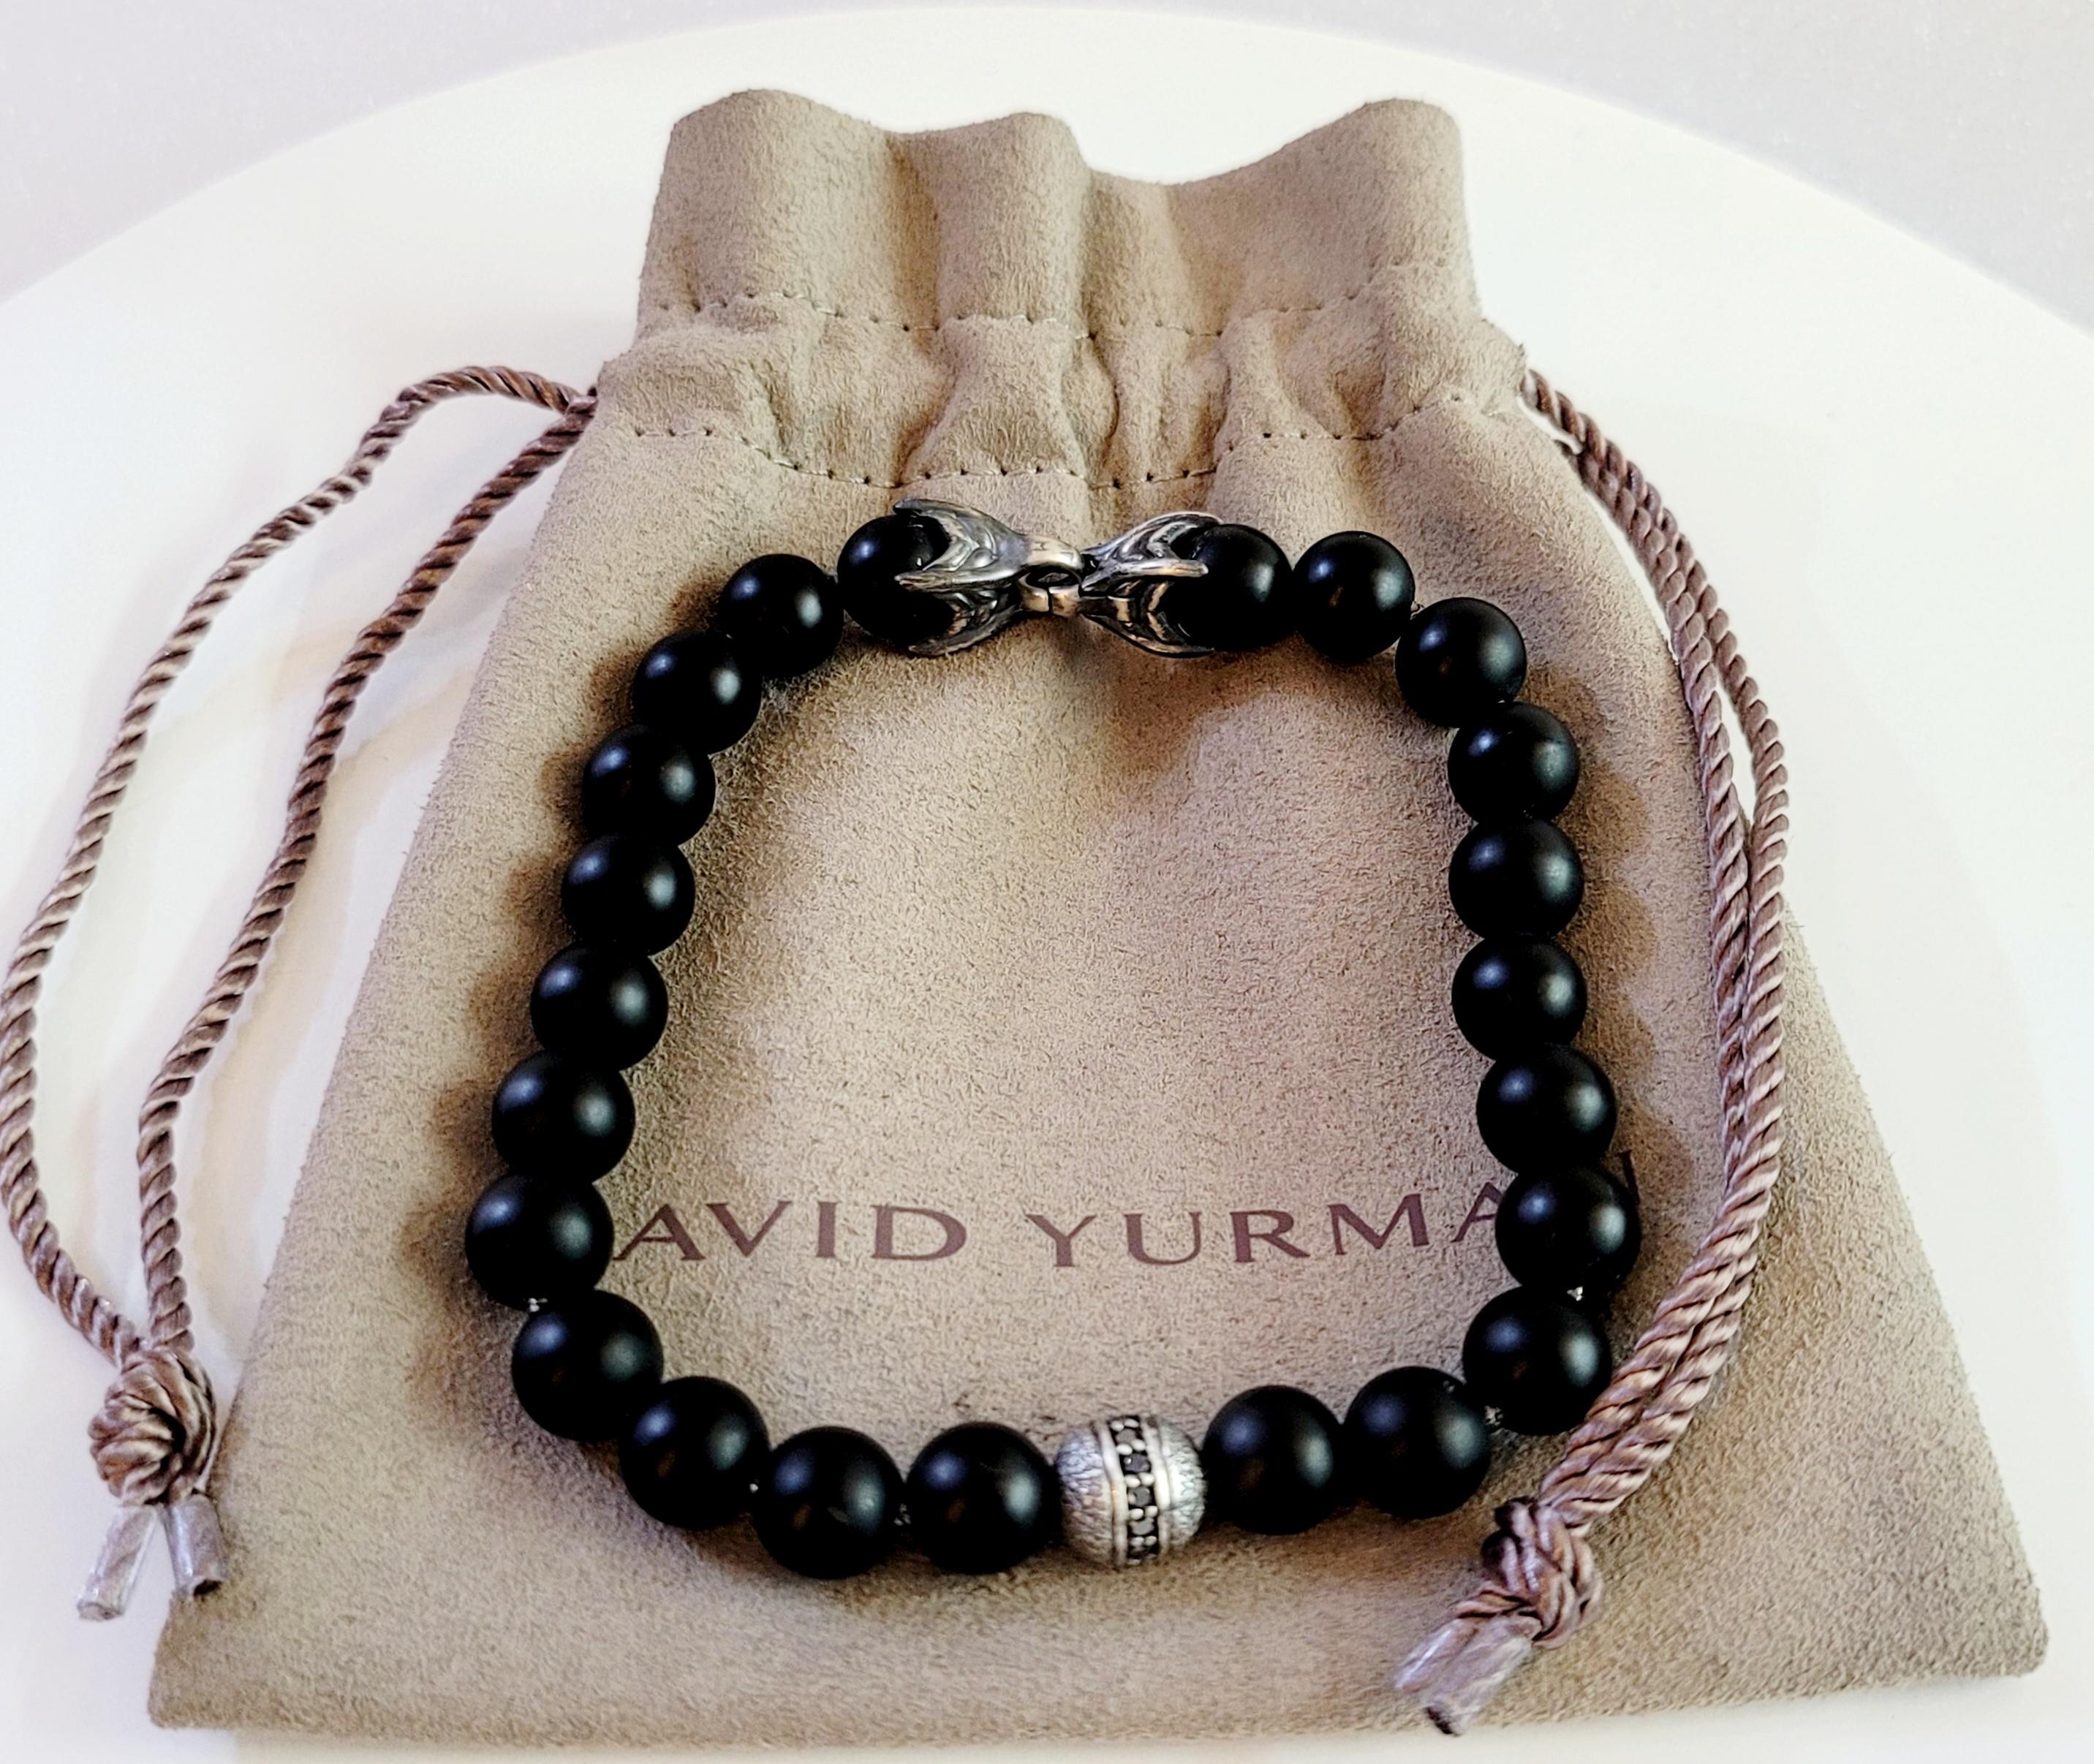 Taille ronde David Yurman Spiritual Beads Bracelet with Black Onyx in Sterling Silver (Bracelet de perles spirituelles avec onyx noir en argent) en vente